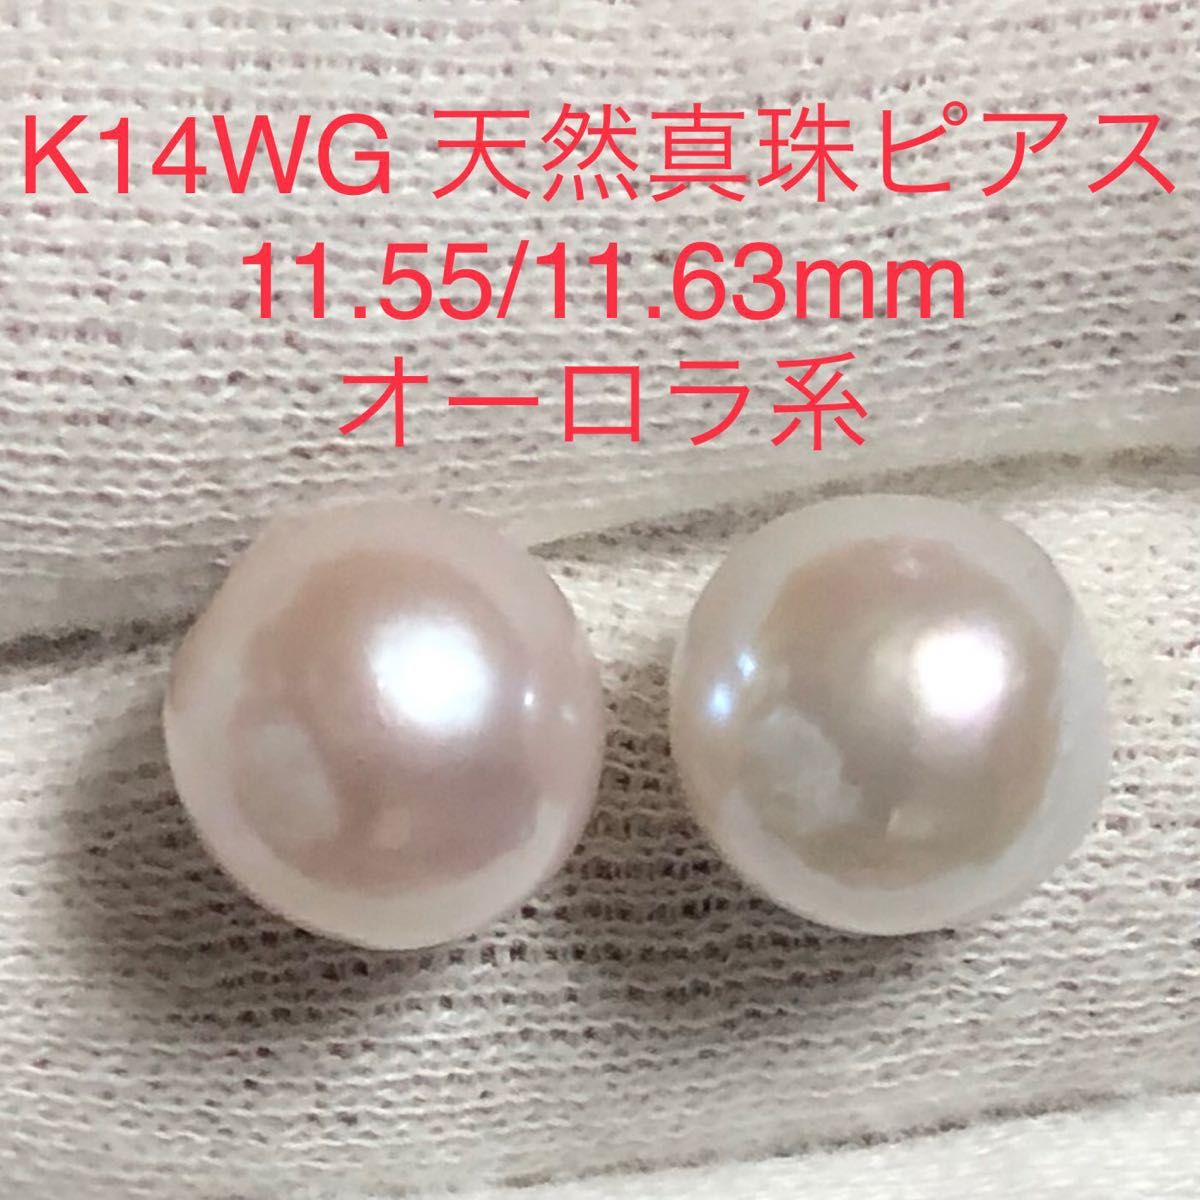 K14WG 天然真珠ピアス　オーロラ系　11.55/11.63mm